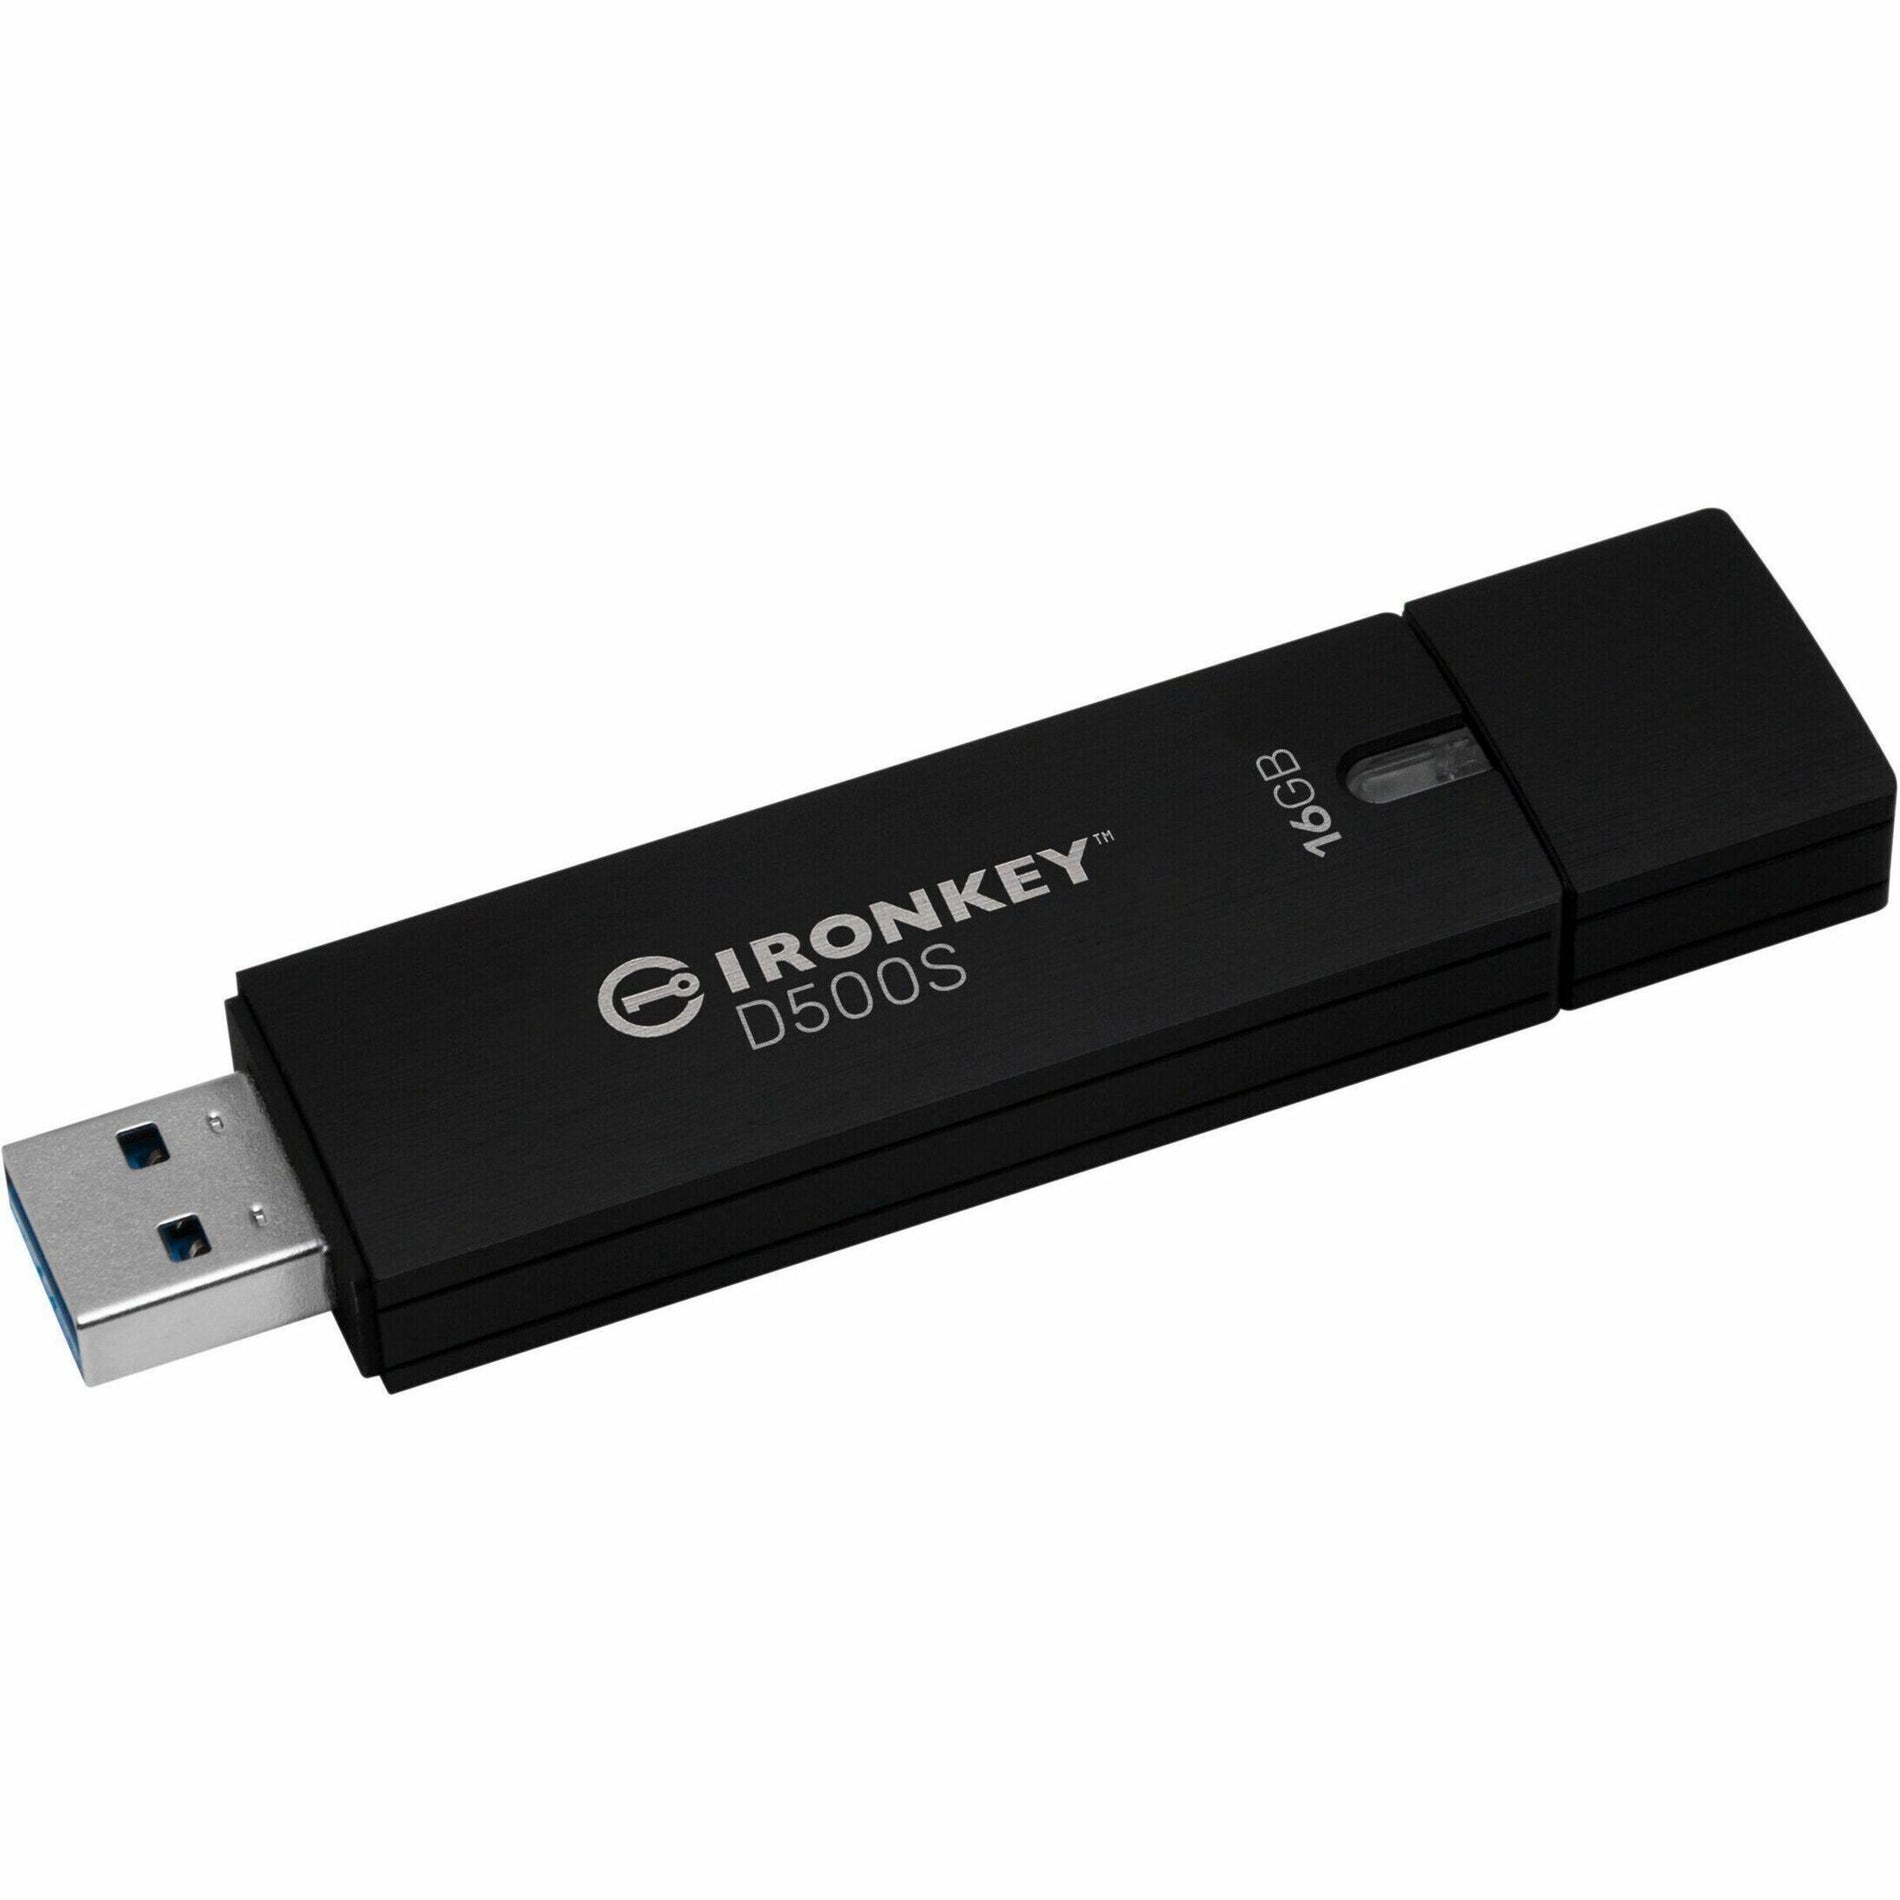 IronKey IKD500S/16GB D500S 16GB USB 3.2 (Gen 1) Type A Flash Drive, Waterproof, Rugged Casing